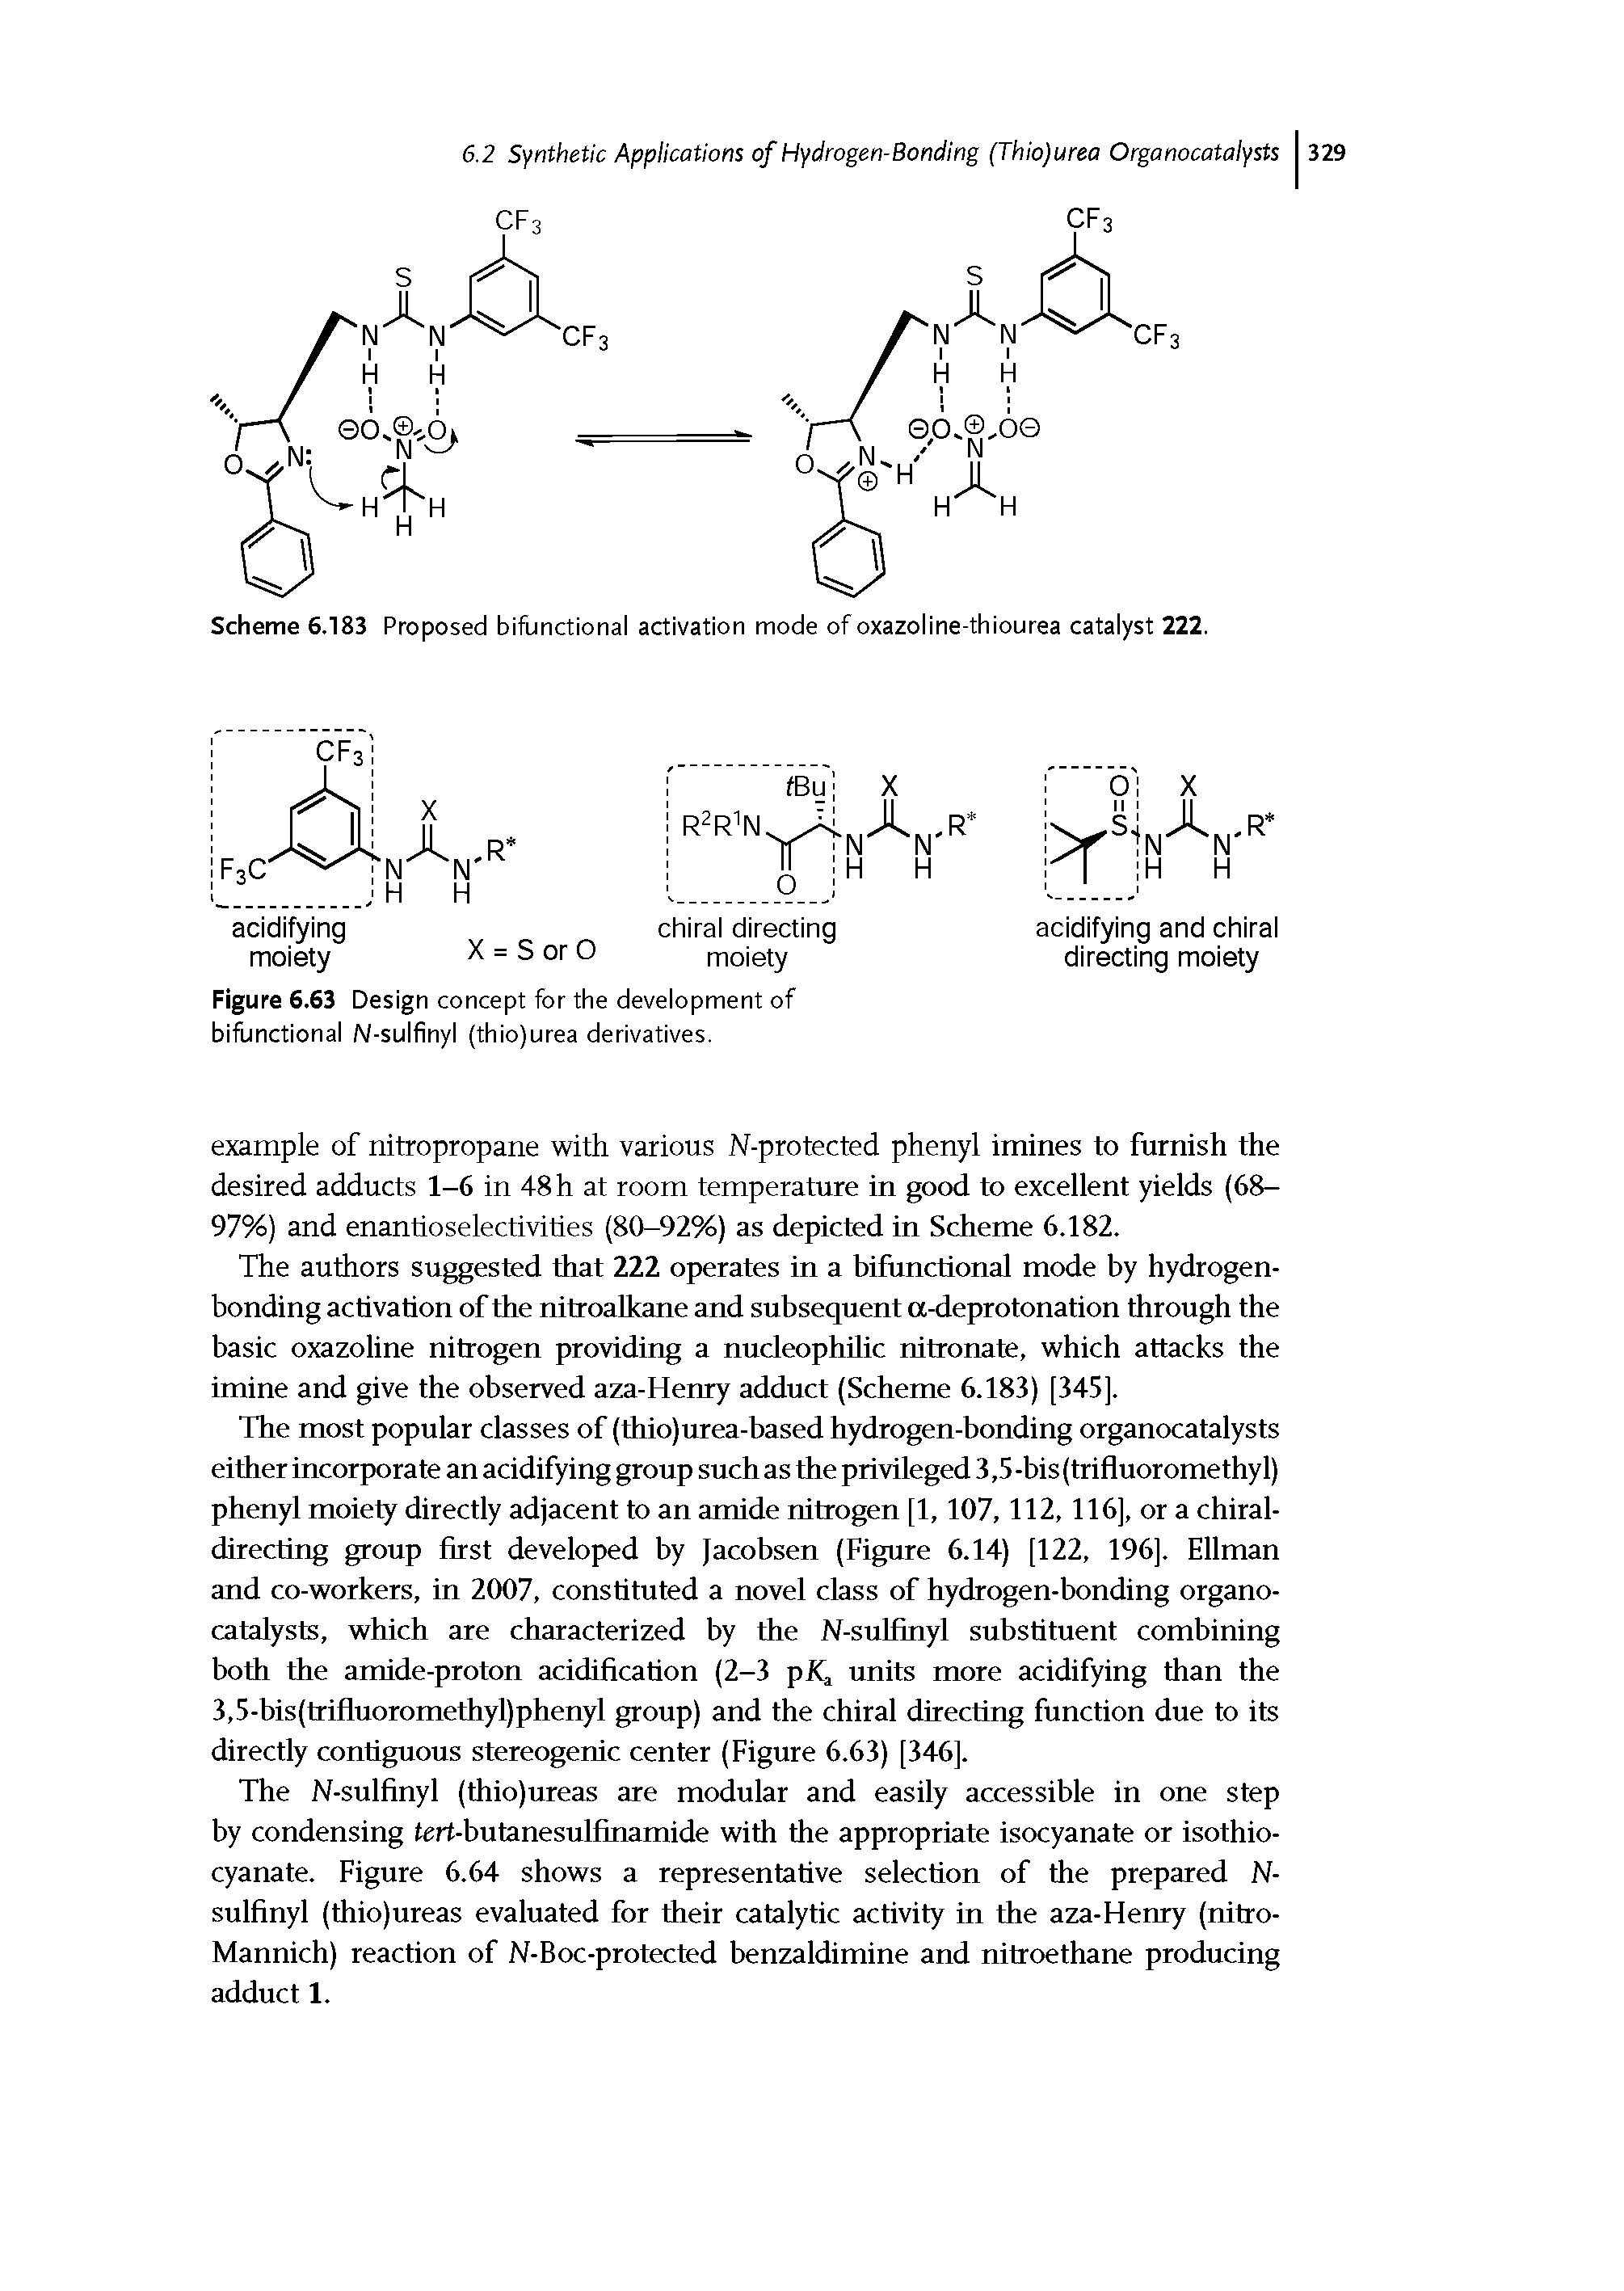 Figure 6.63 Design concept for the development of bifunctlonal N-sulfinyl (thio)urea derivatives.